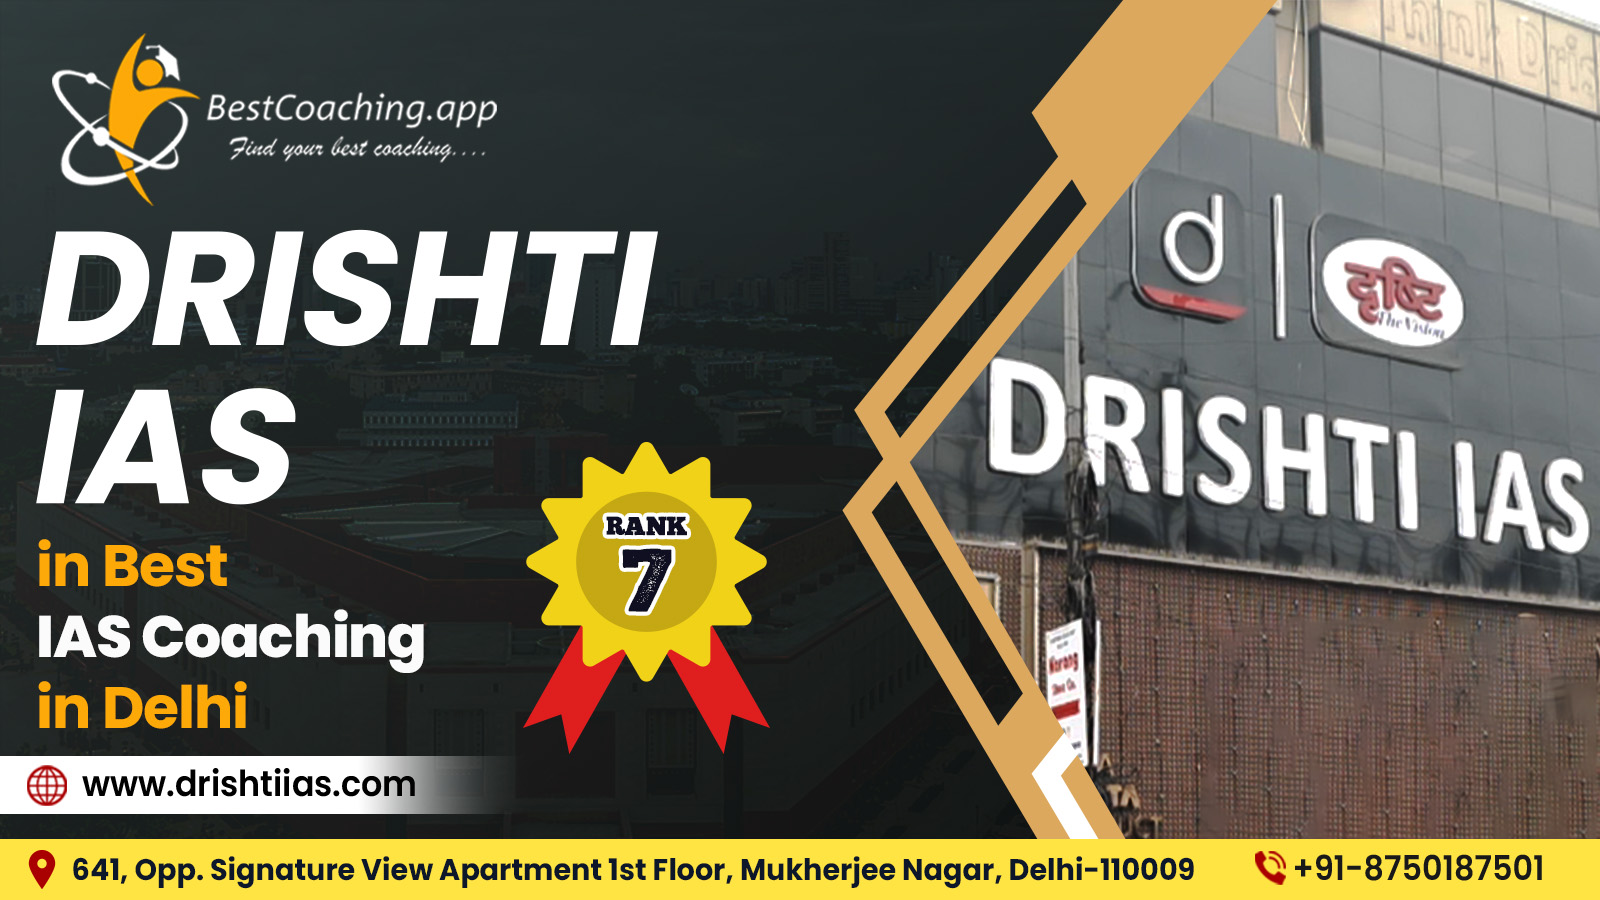 Drishti IAS | Rank 7 in Best IAS Coaching in Delhi